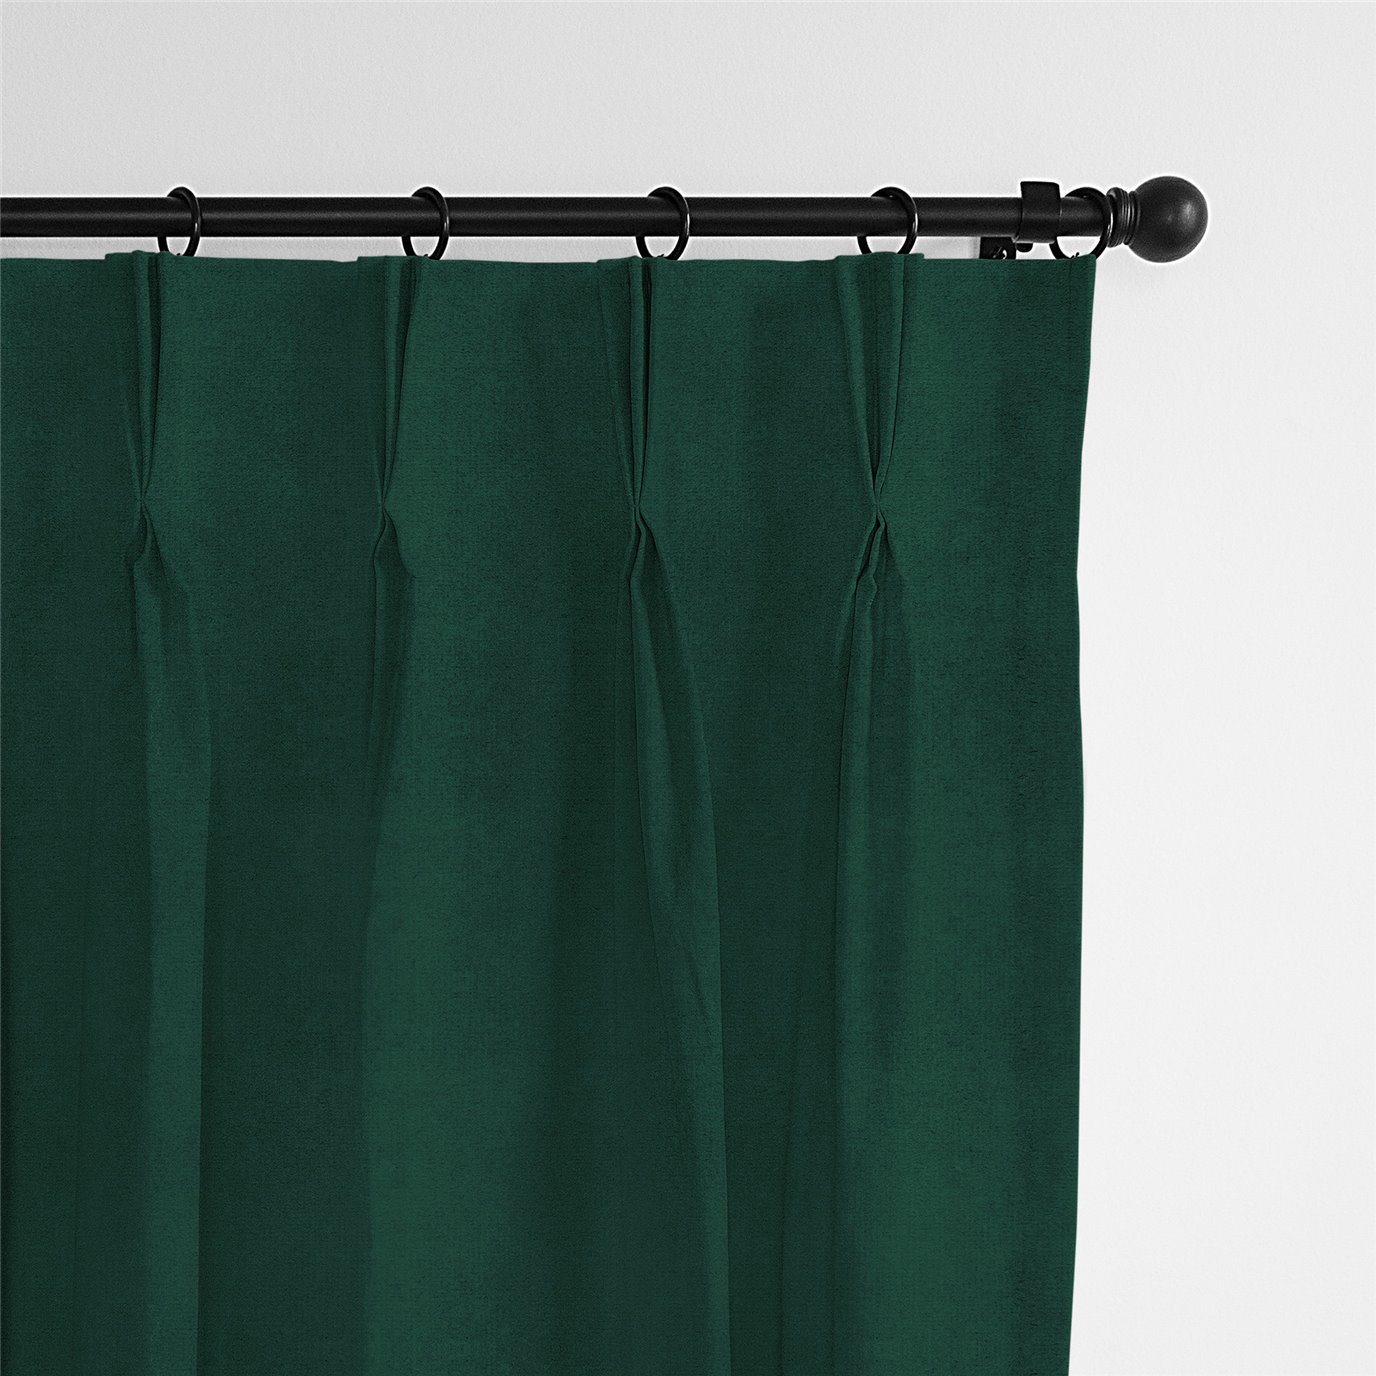 Vanessa Emerald Pinch Pleat Drapery Panel - Pair - Size 40"x108"